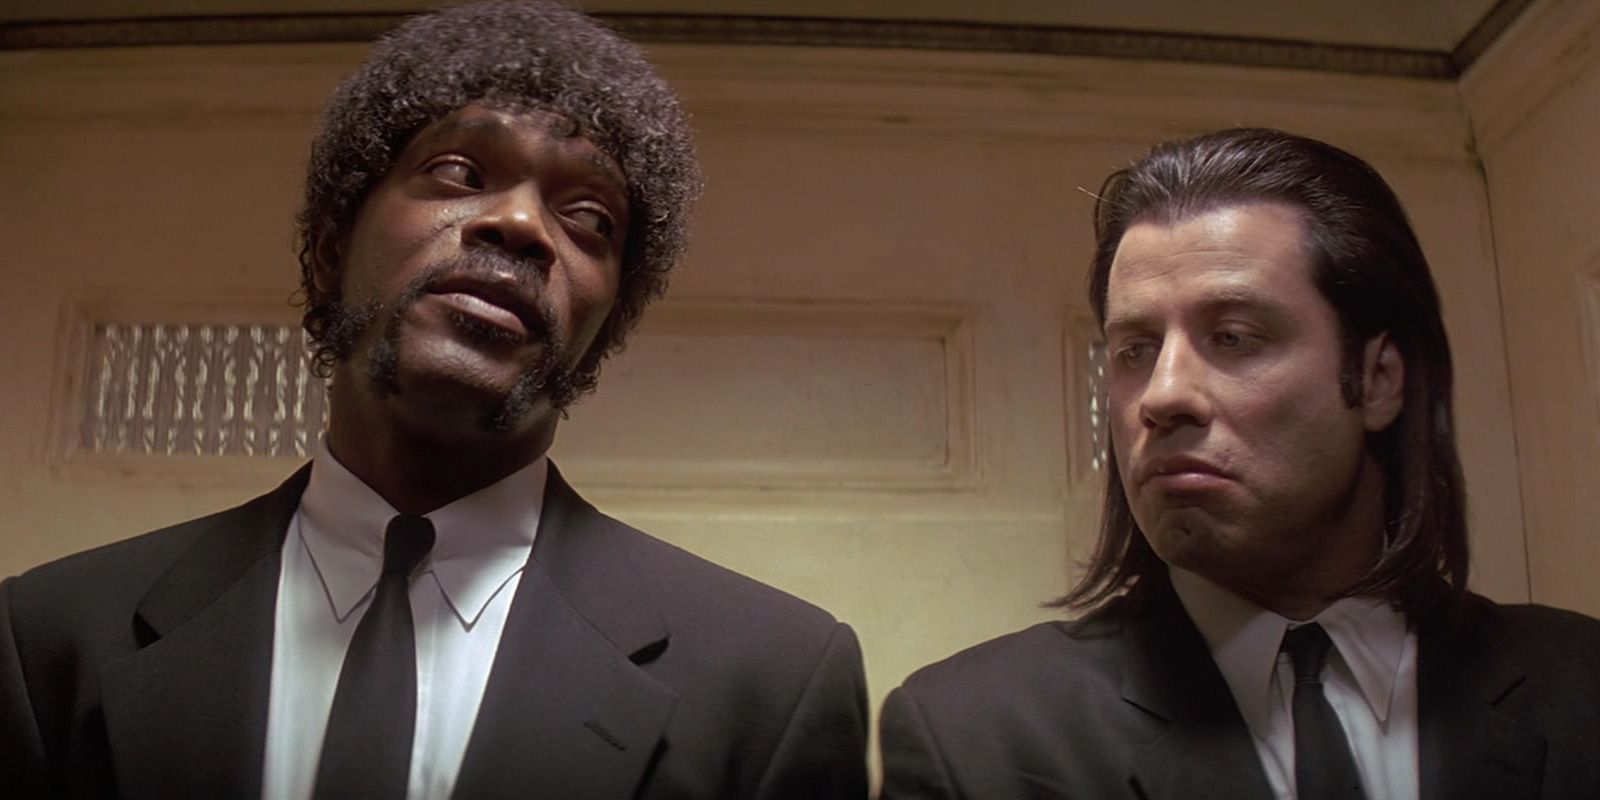 John Travolta and Samuel Jackson in Pulp Fiction